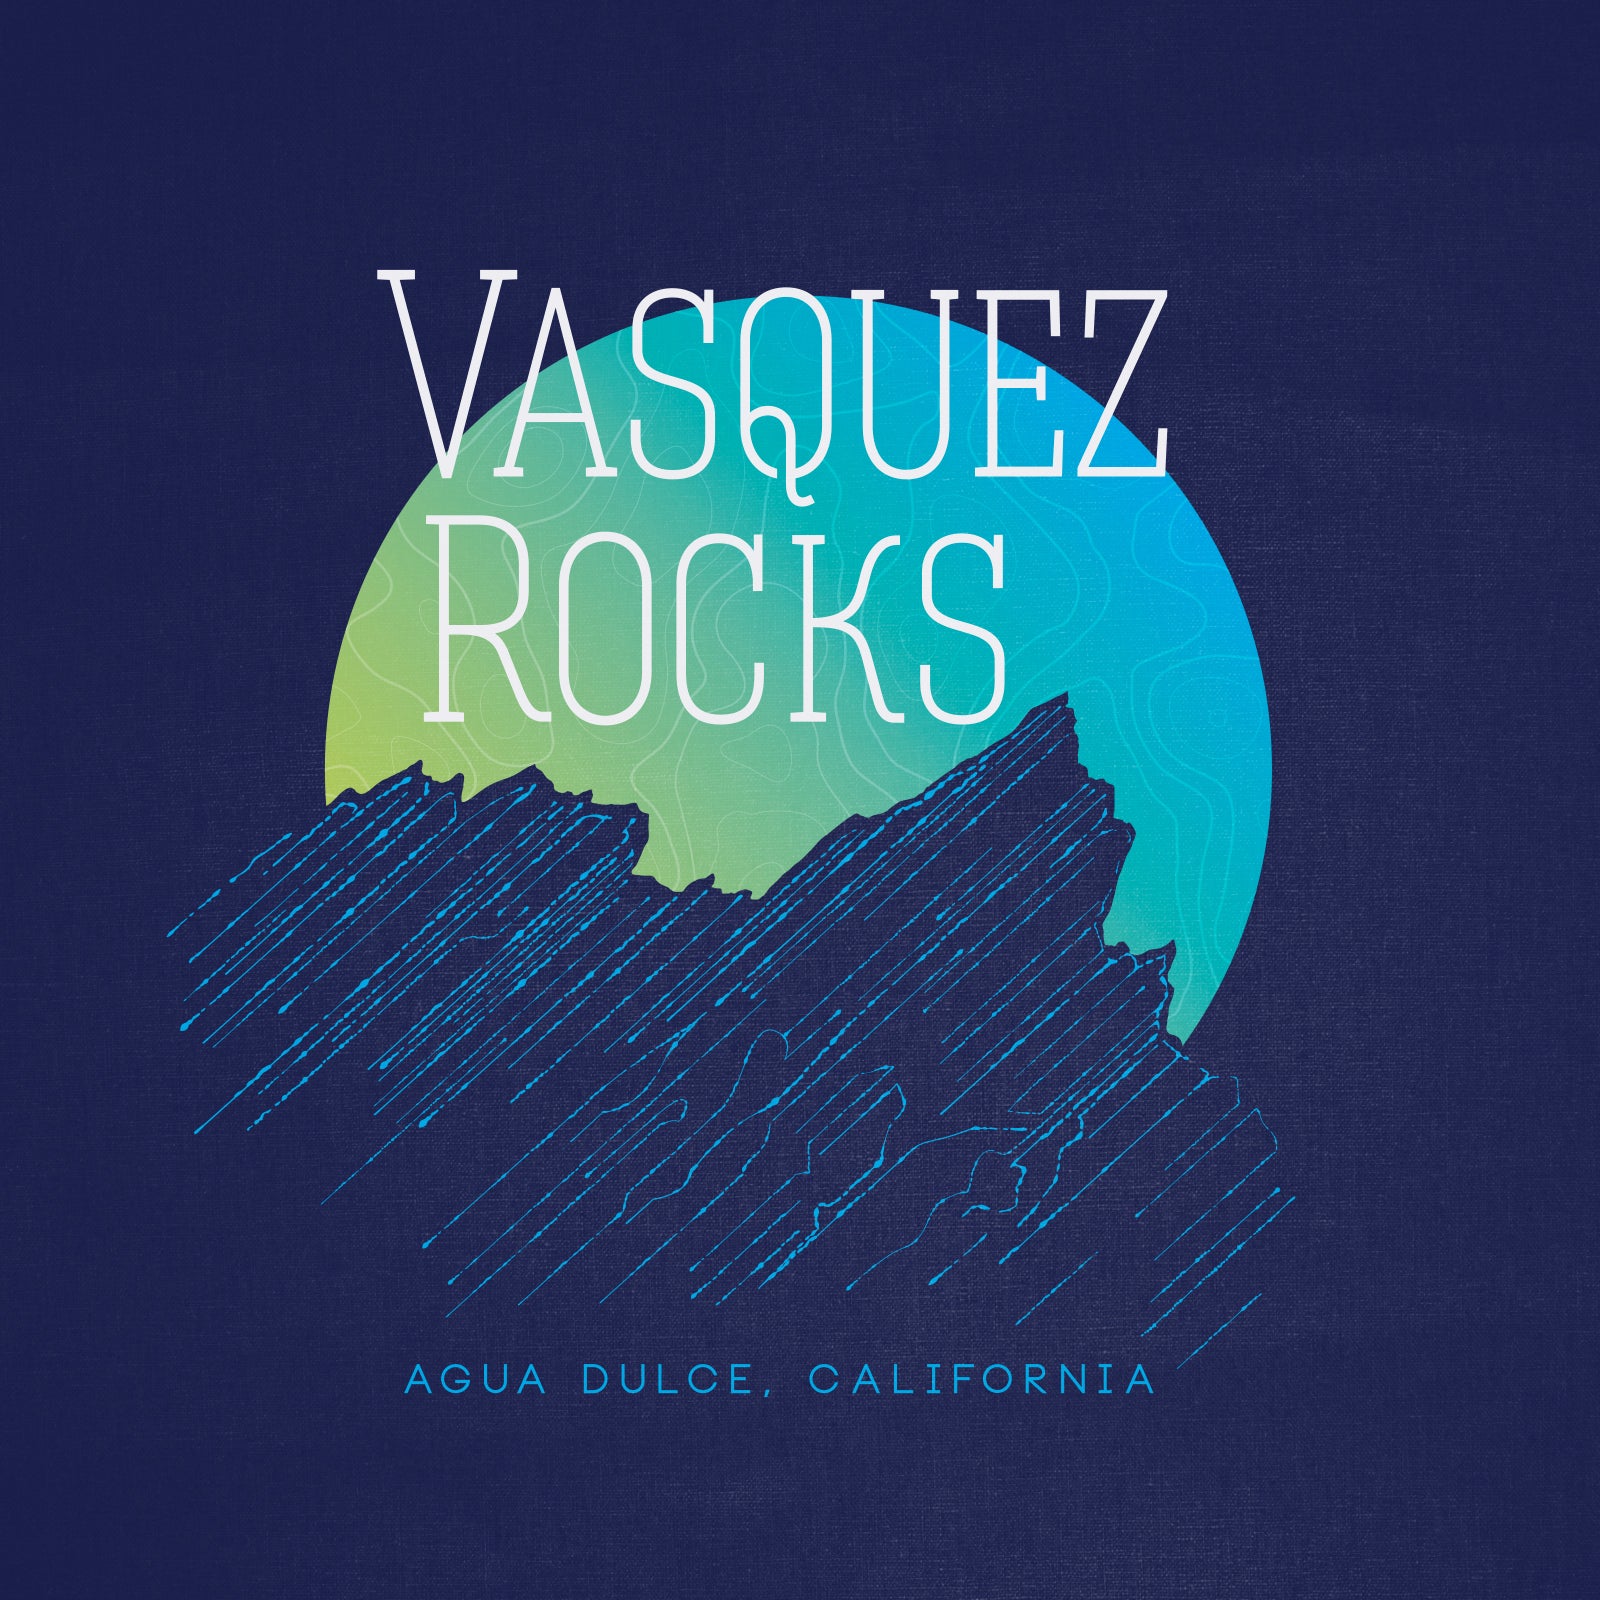 Vasquez Rocks T-Shirt